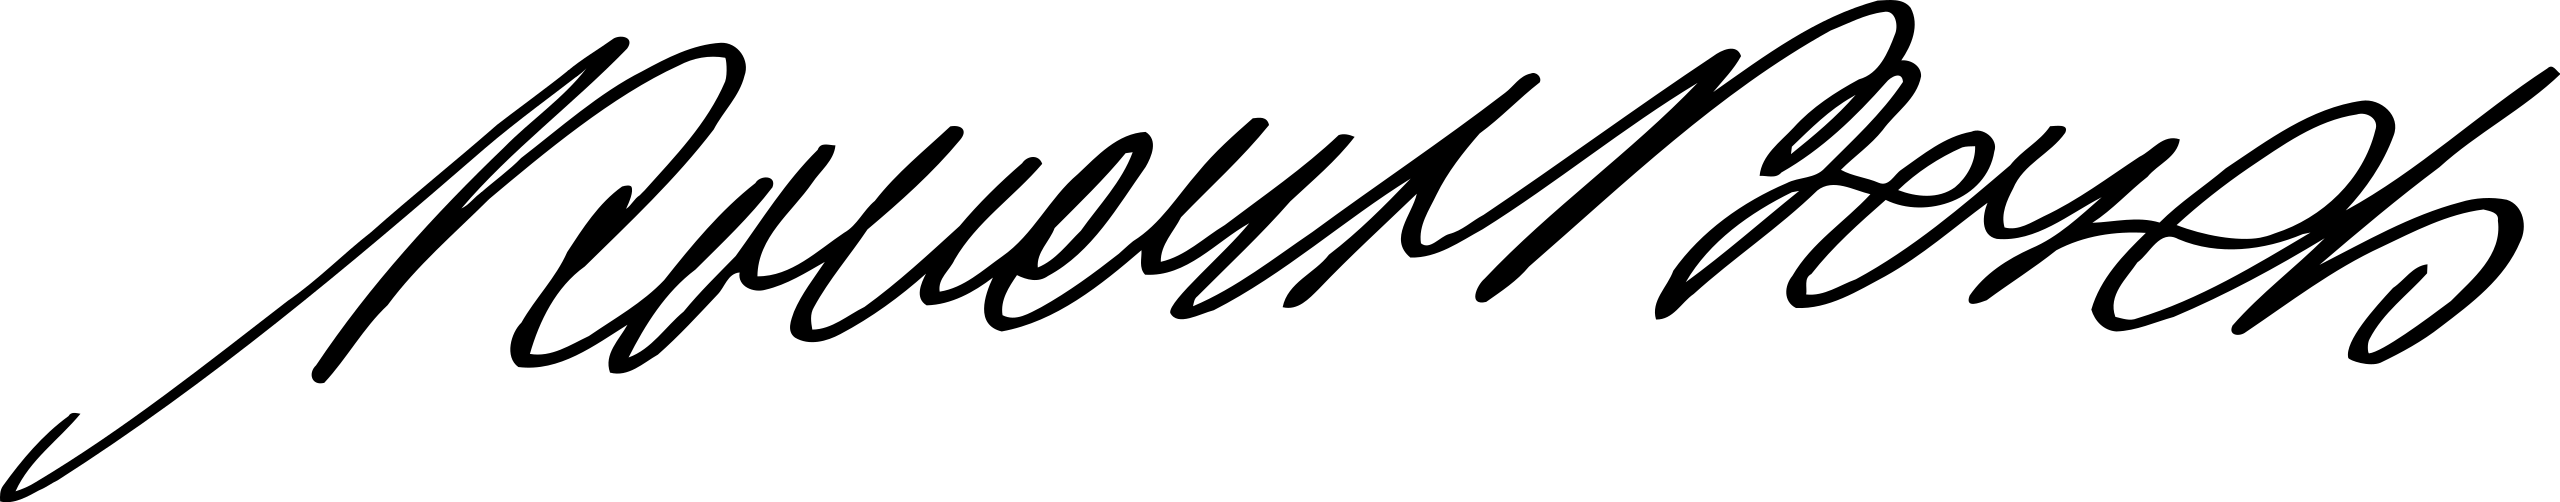 File:Bosch-logo.svg - Wikipedia